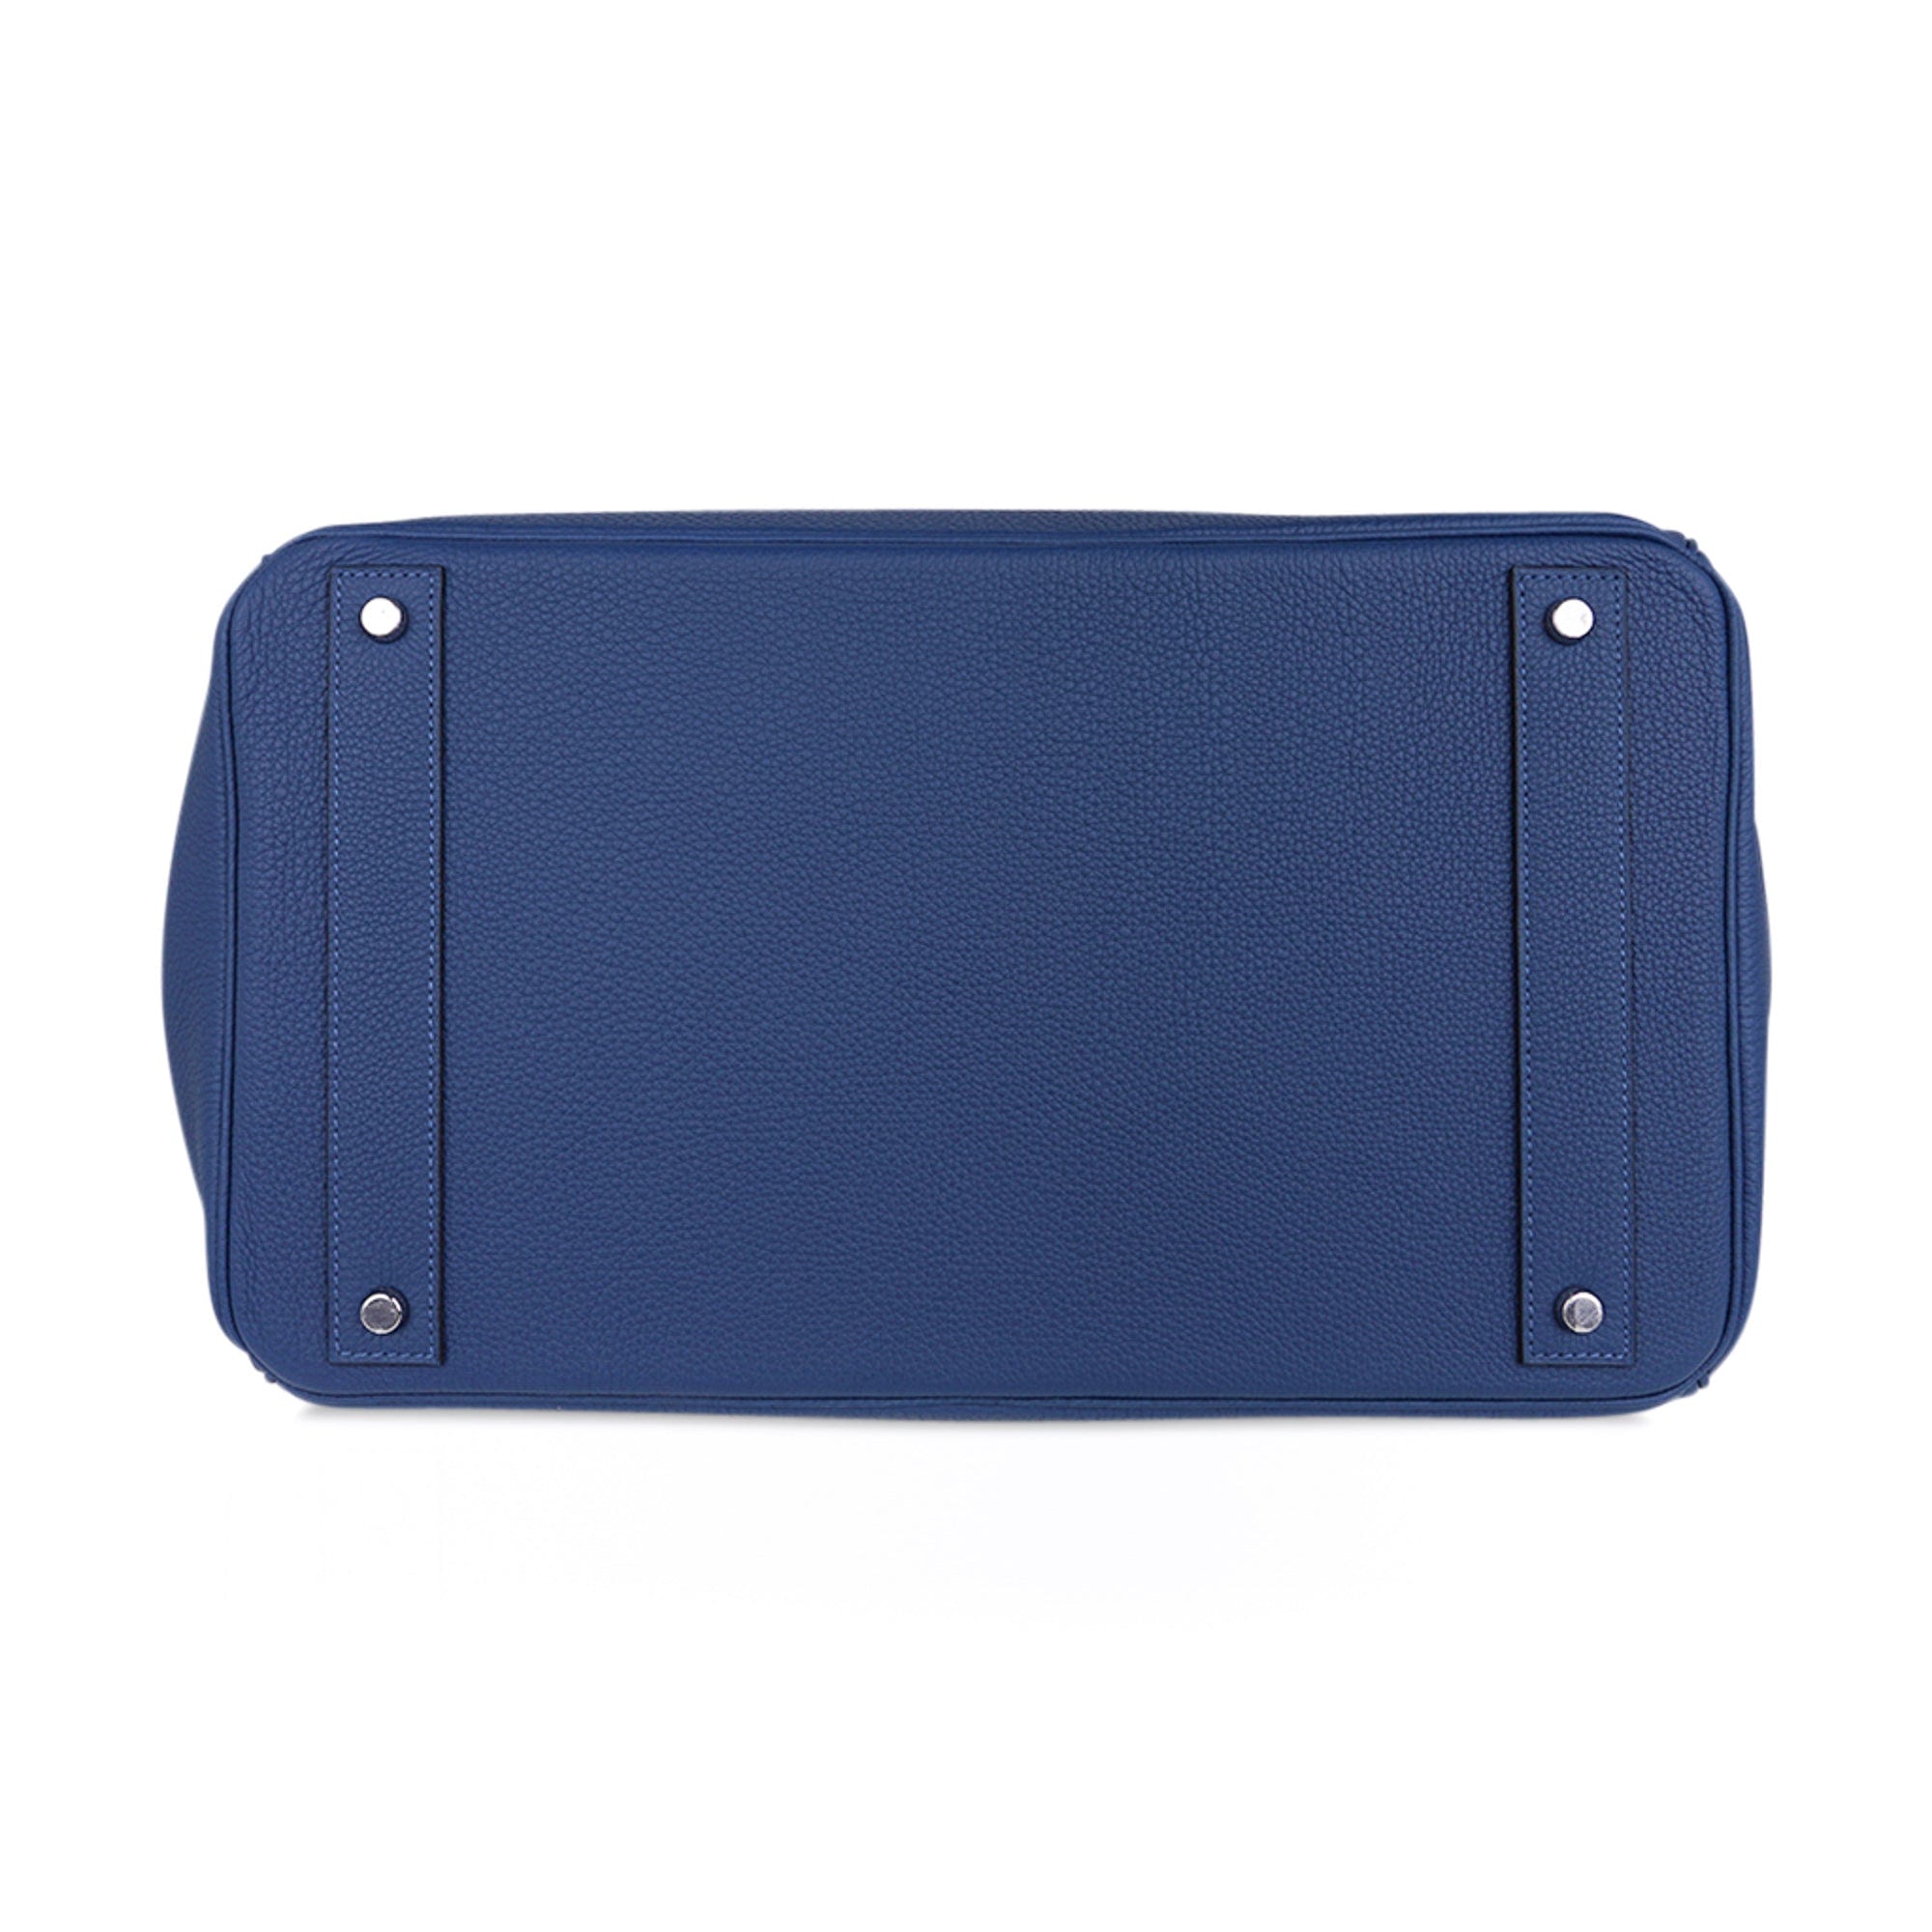 Hermès Birkin 40 Bag Bleu Covert Togo Leather - Palladium Hardware